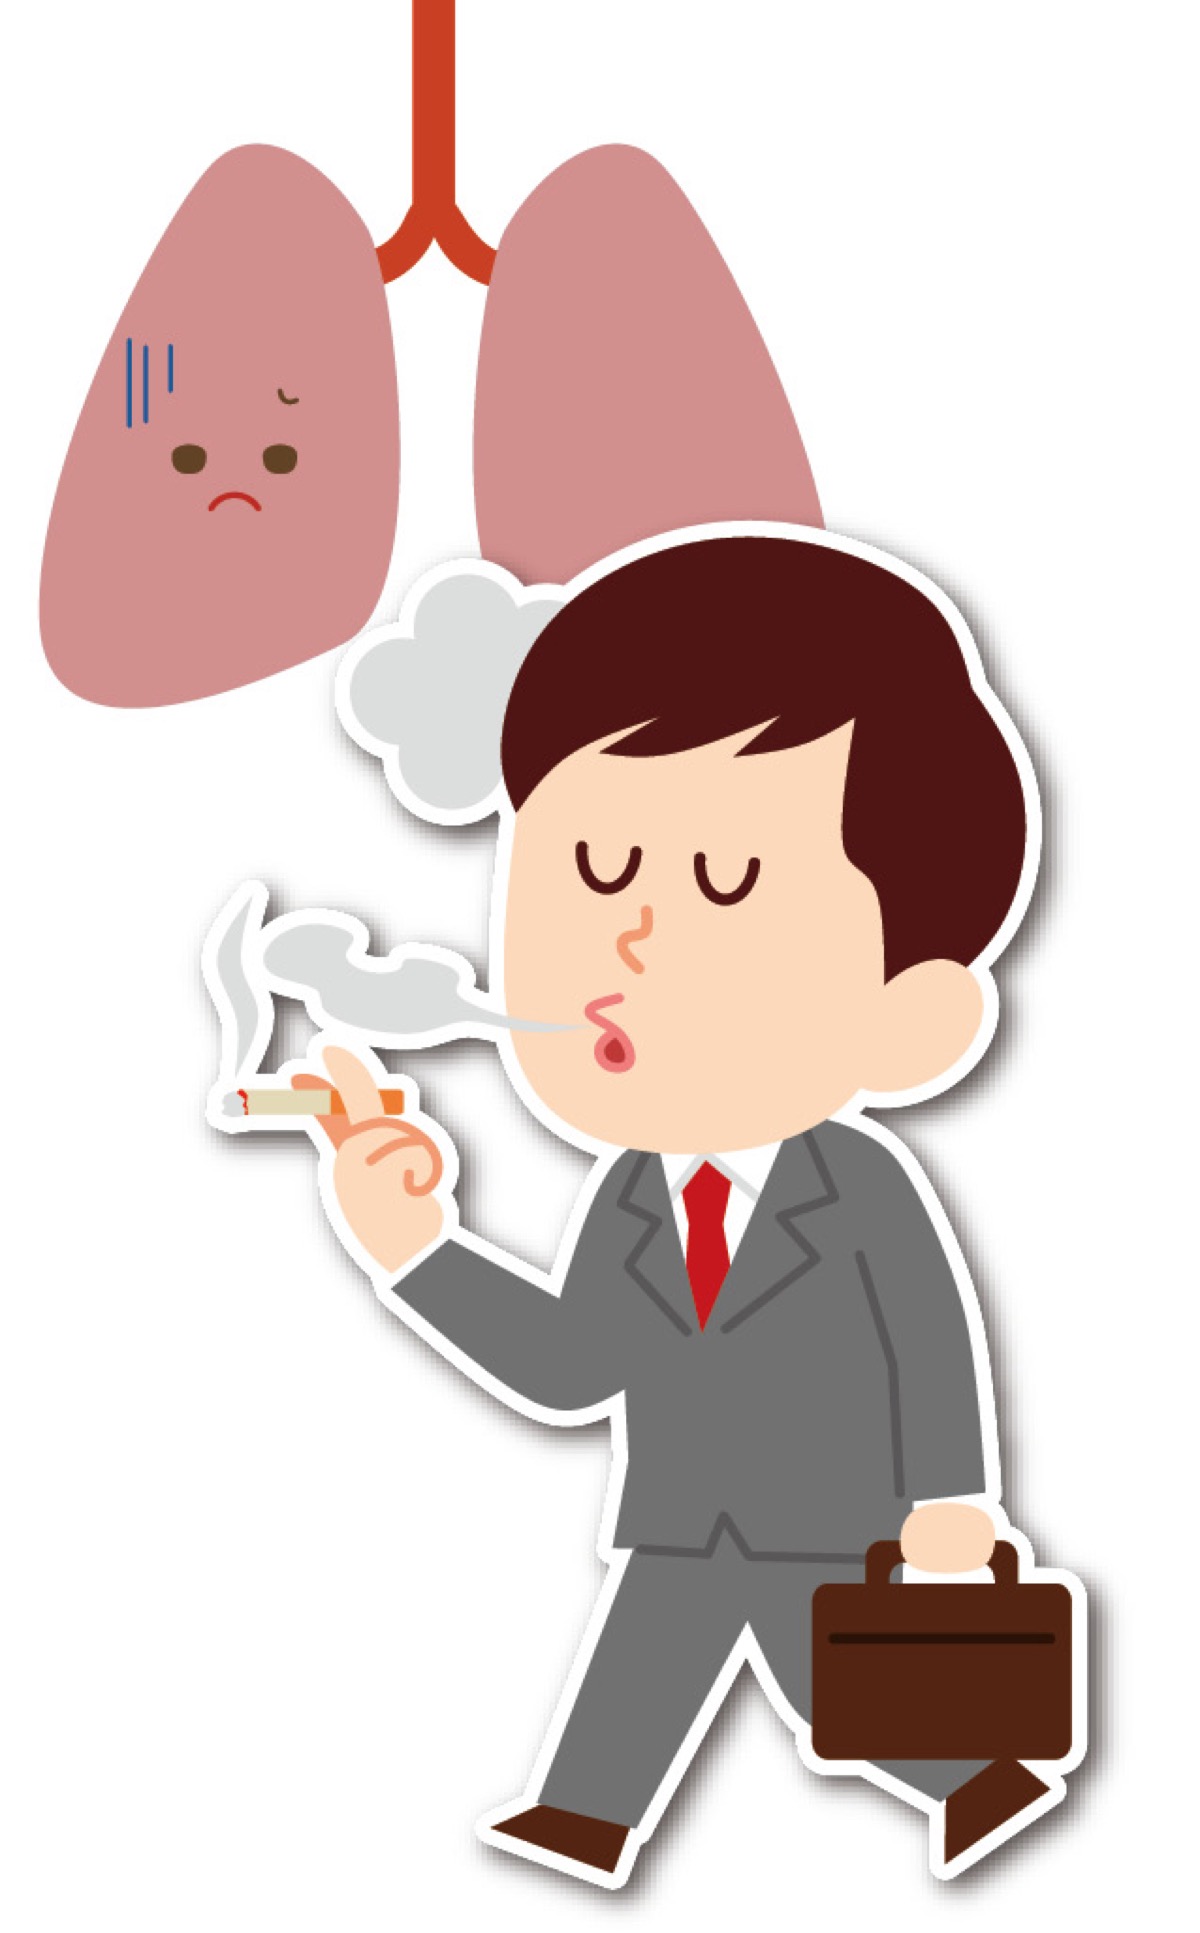 喫煙と呼吸器疾患